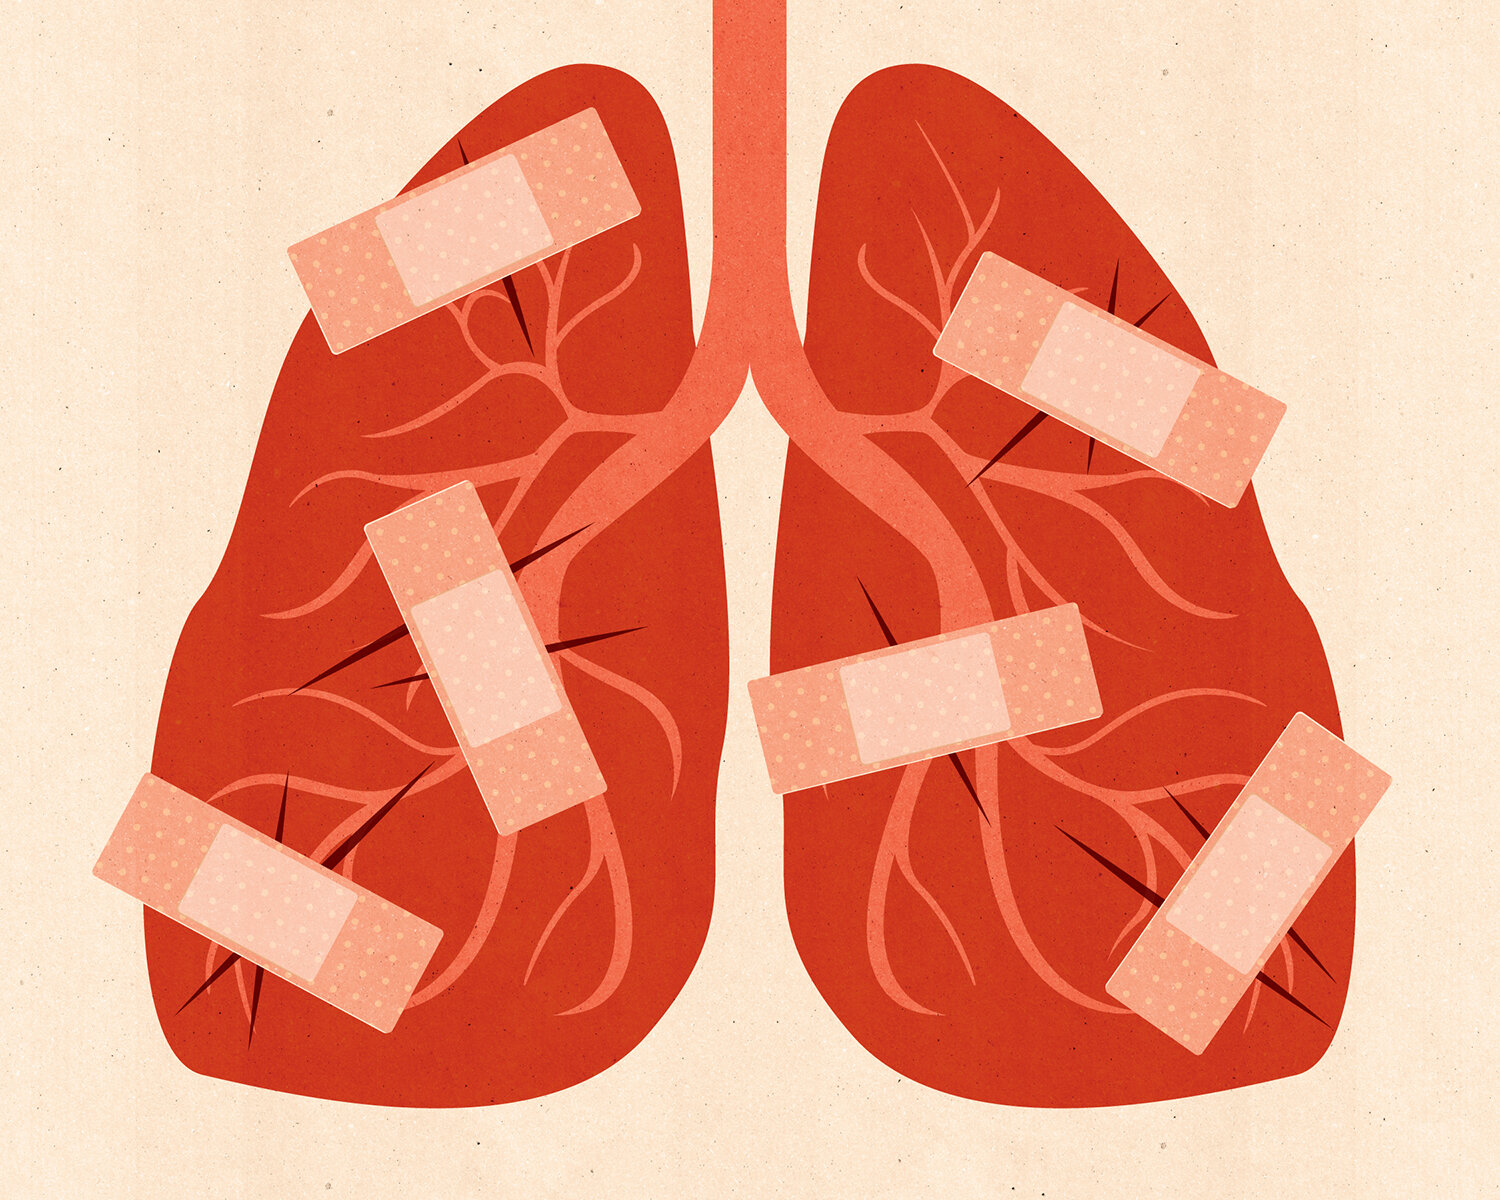 Healing Lungs 15 x 12 in_textures RGB 1500.jpg